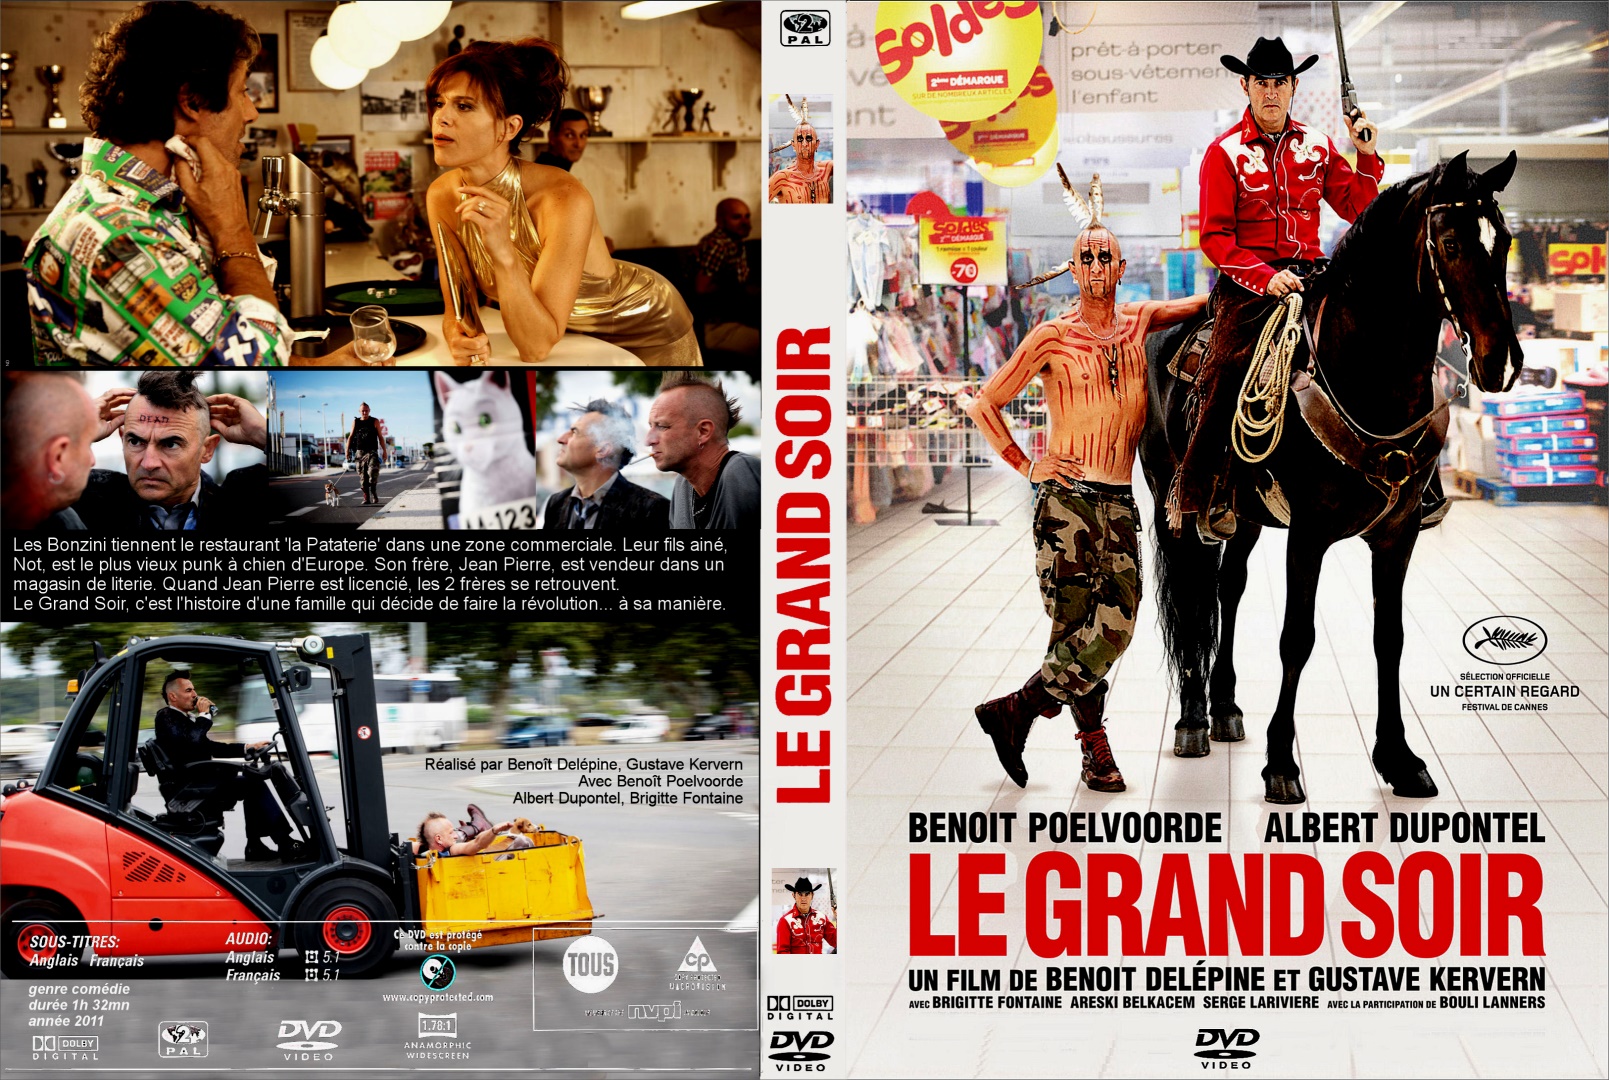 Jaquette DVD Le Grand soir custom